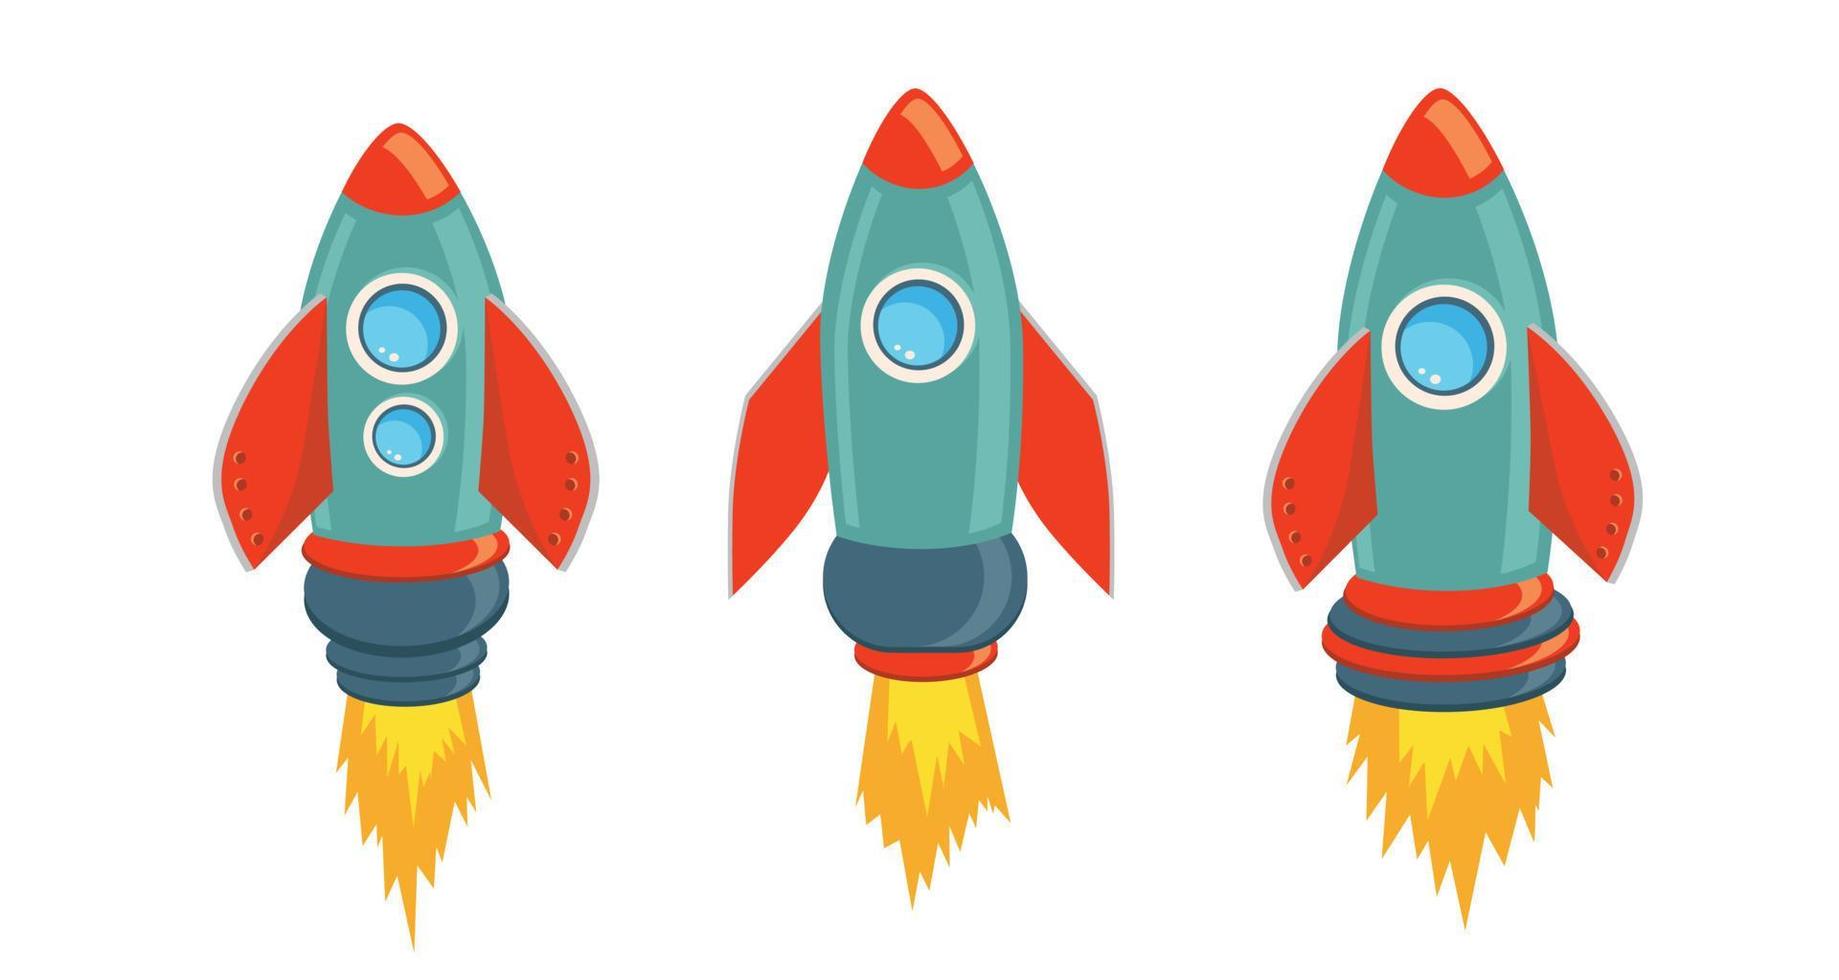 Rocket spaceship, isolated vector illustration.